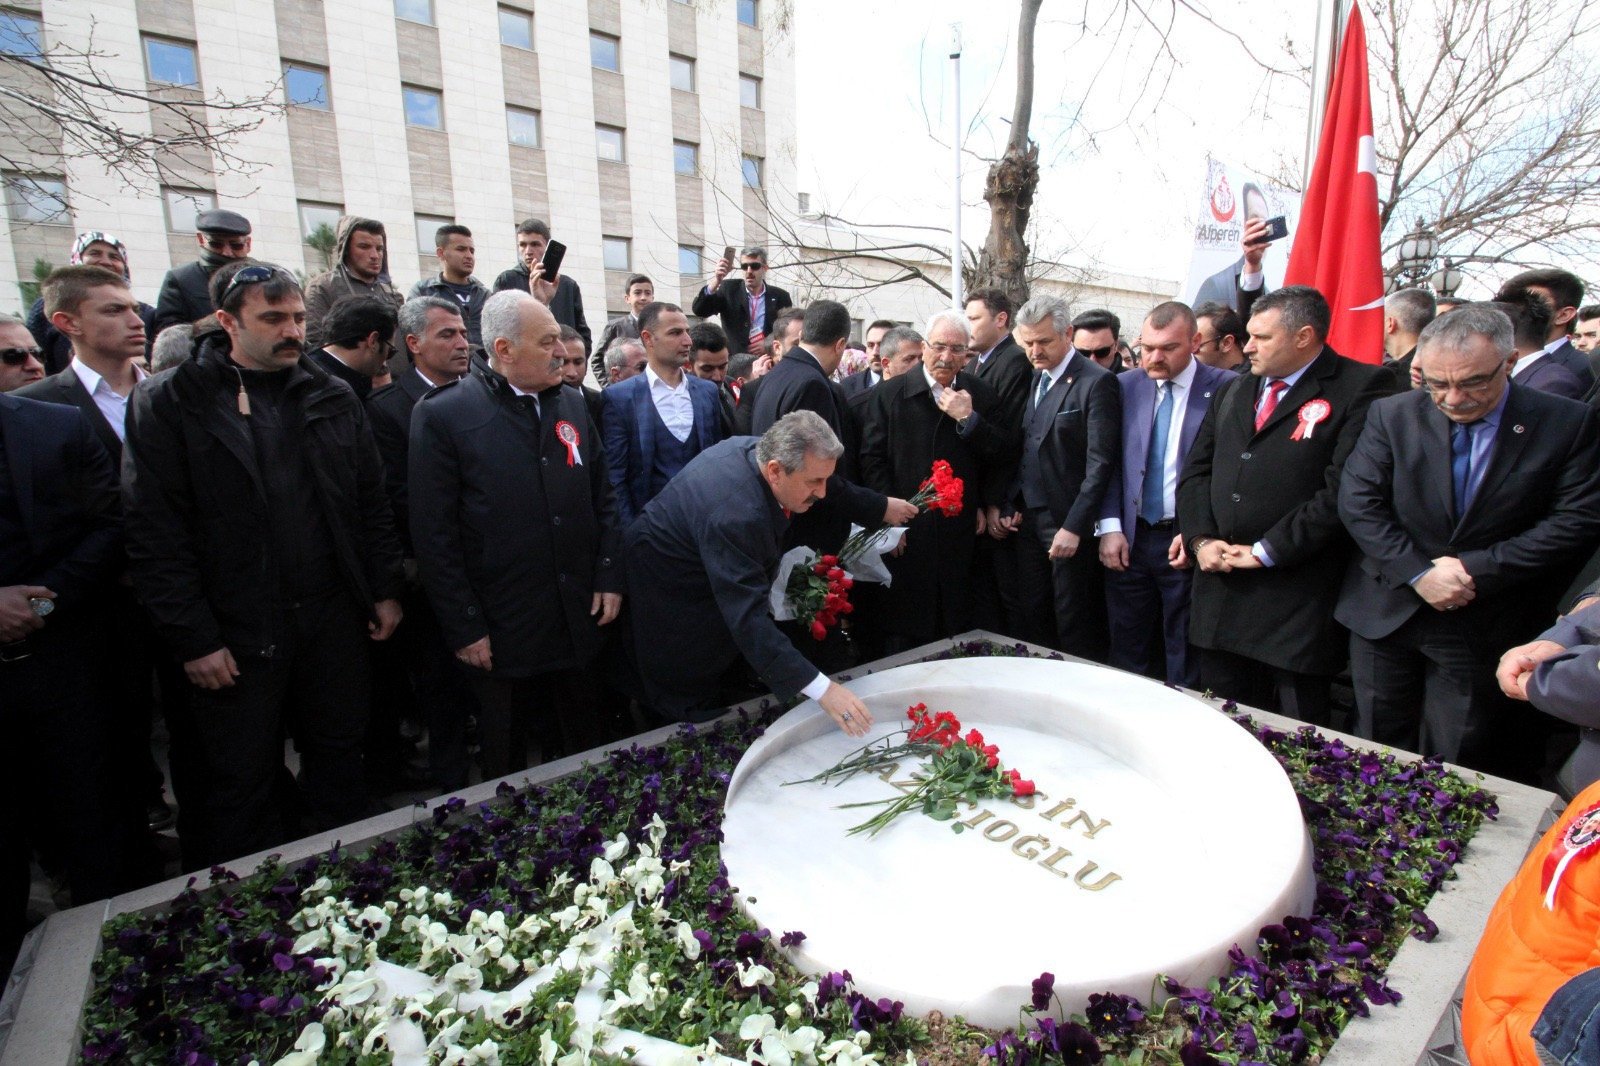 People lay flowers on the grave of Muhsin Yazıcıoğlu, in the capital Ankara, Turkey, March 26, 2019. (DHA PHOTO)